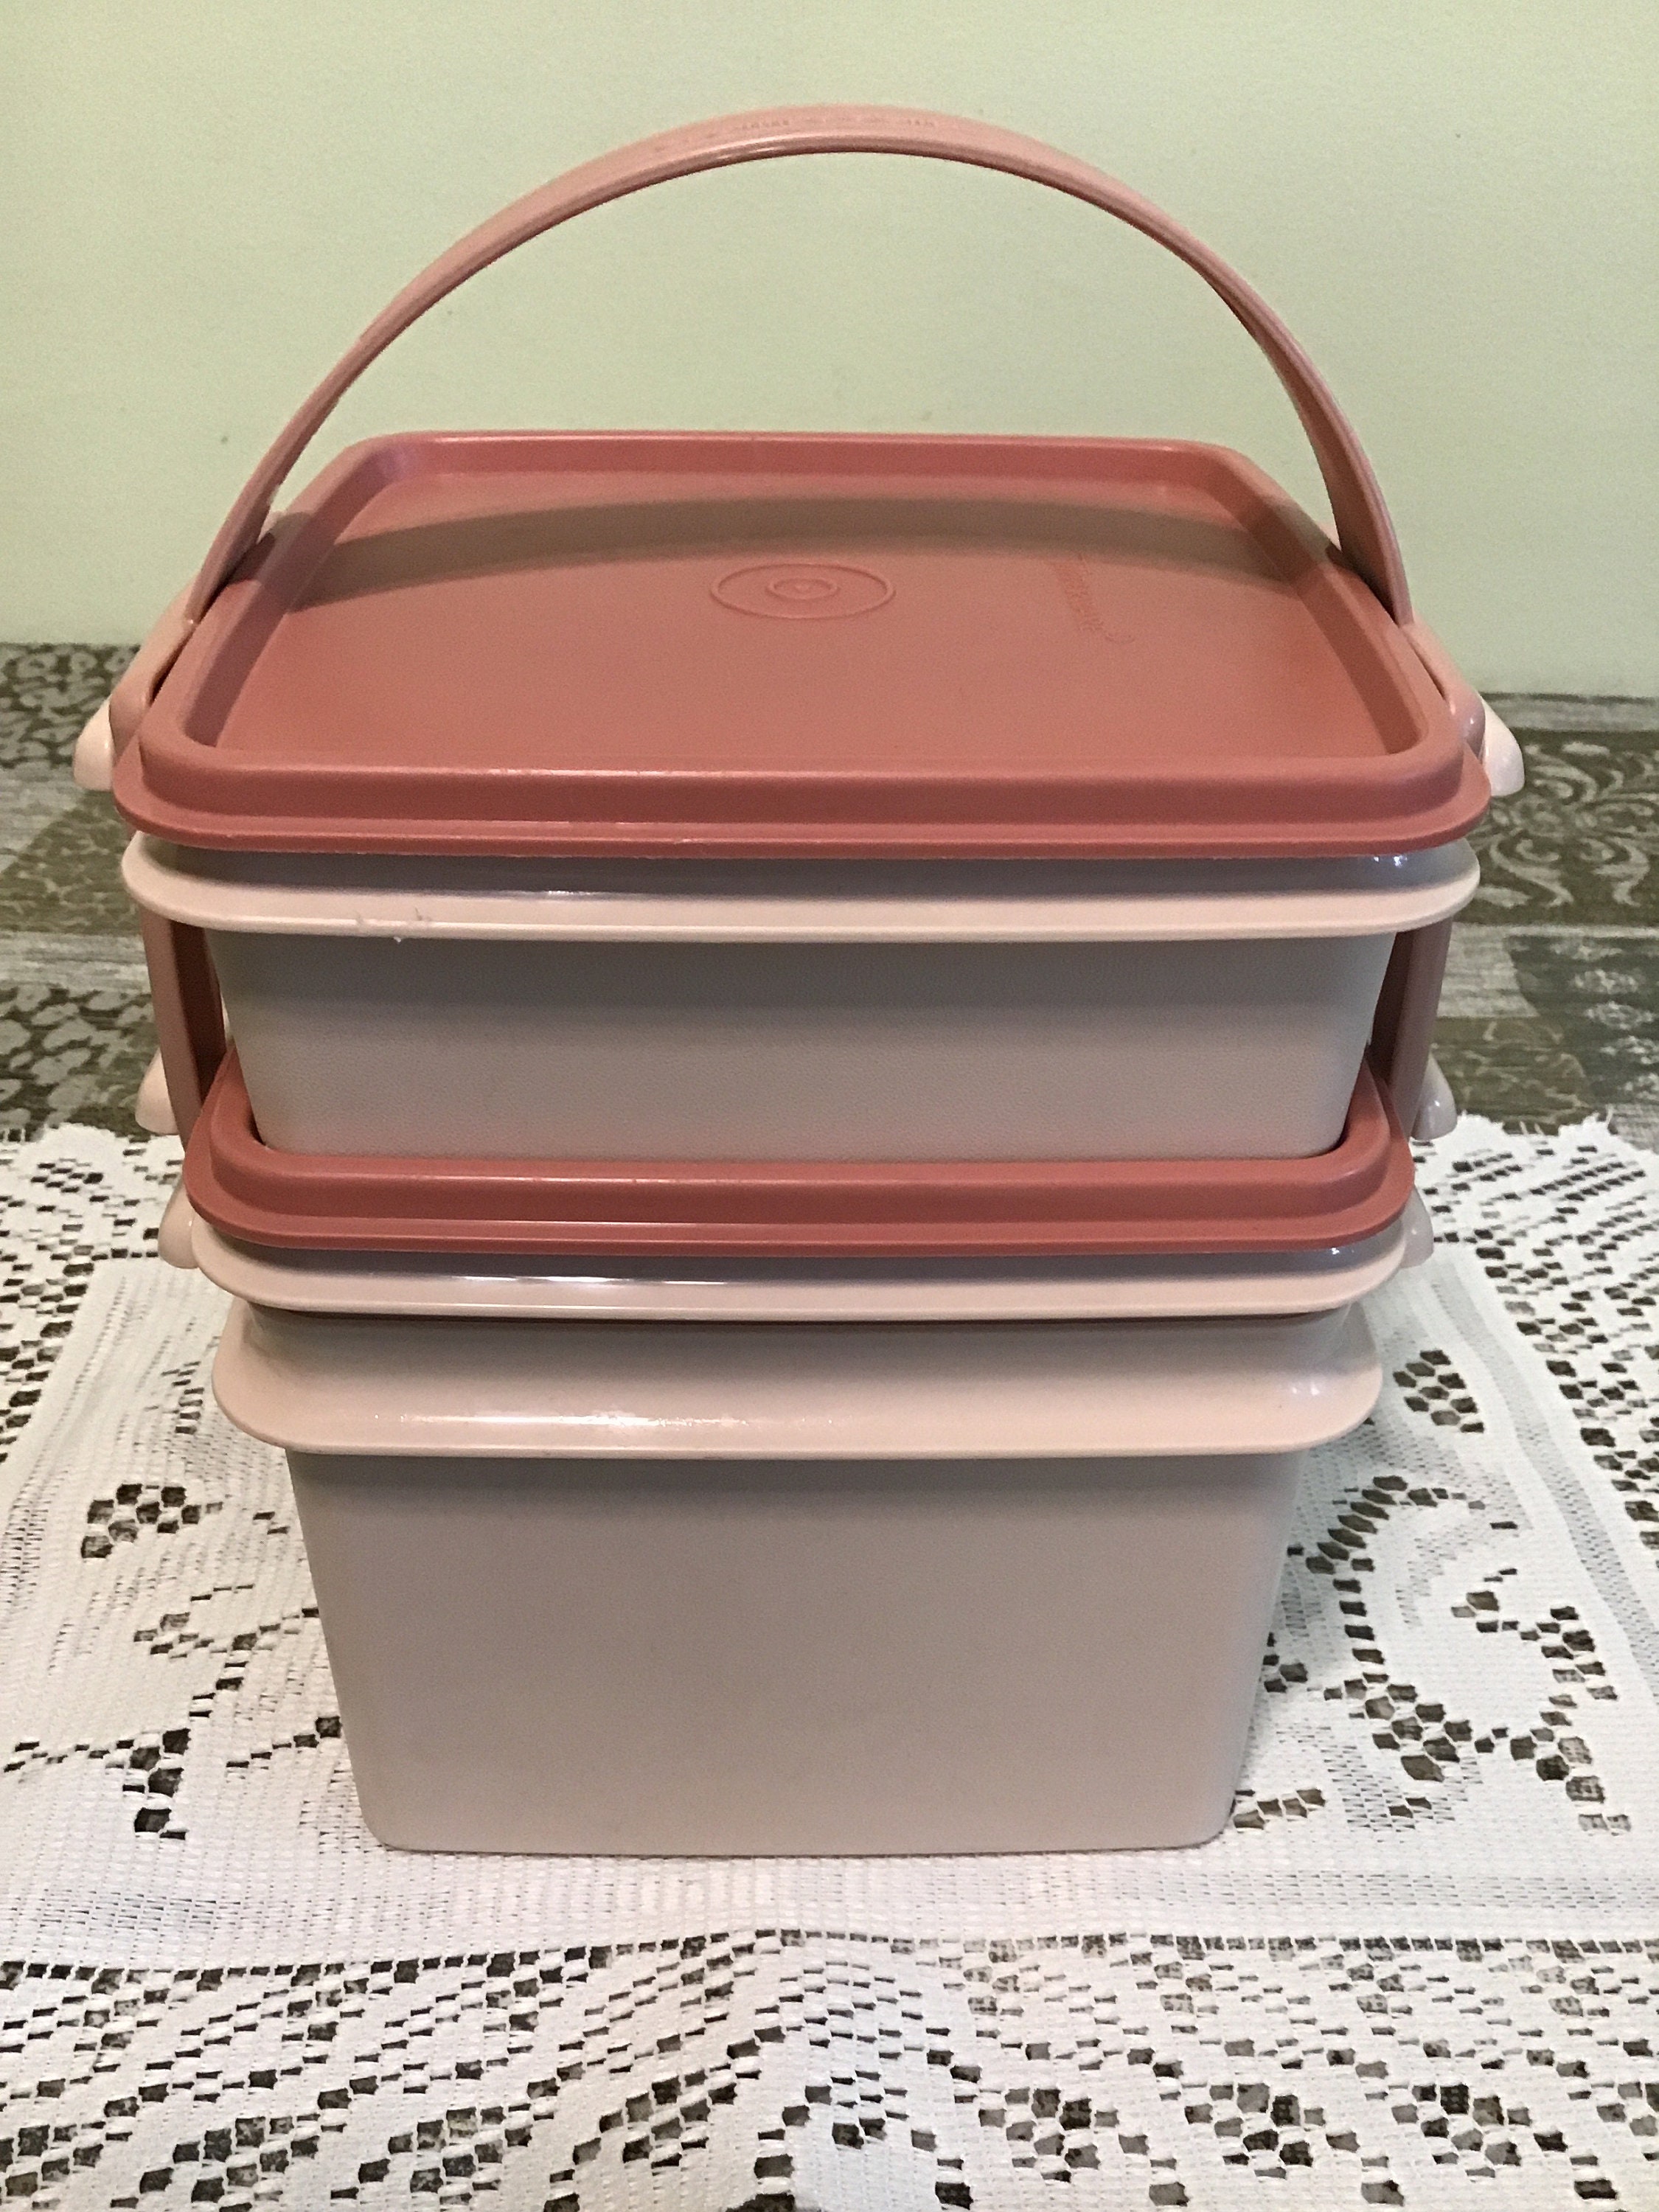  Tupperware Plastic Elegant Lunch Set for Women (Pink): Home &  Kitchen